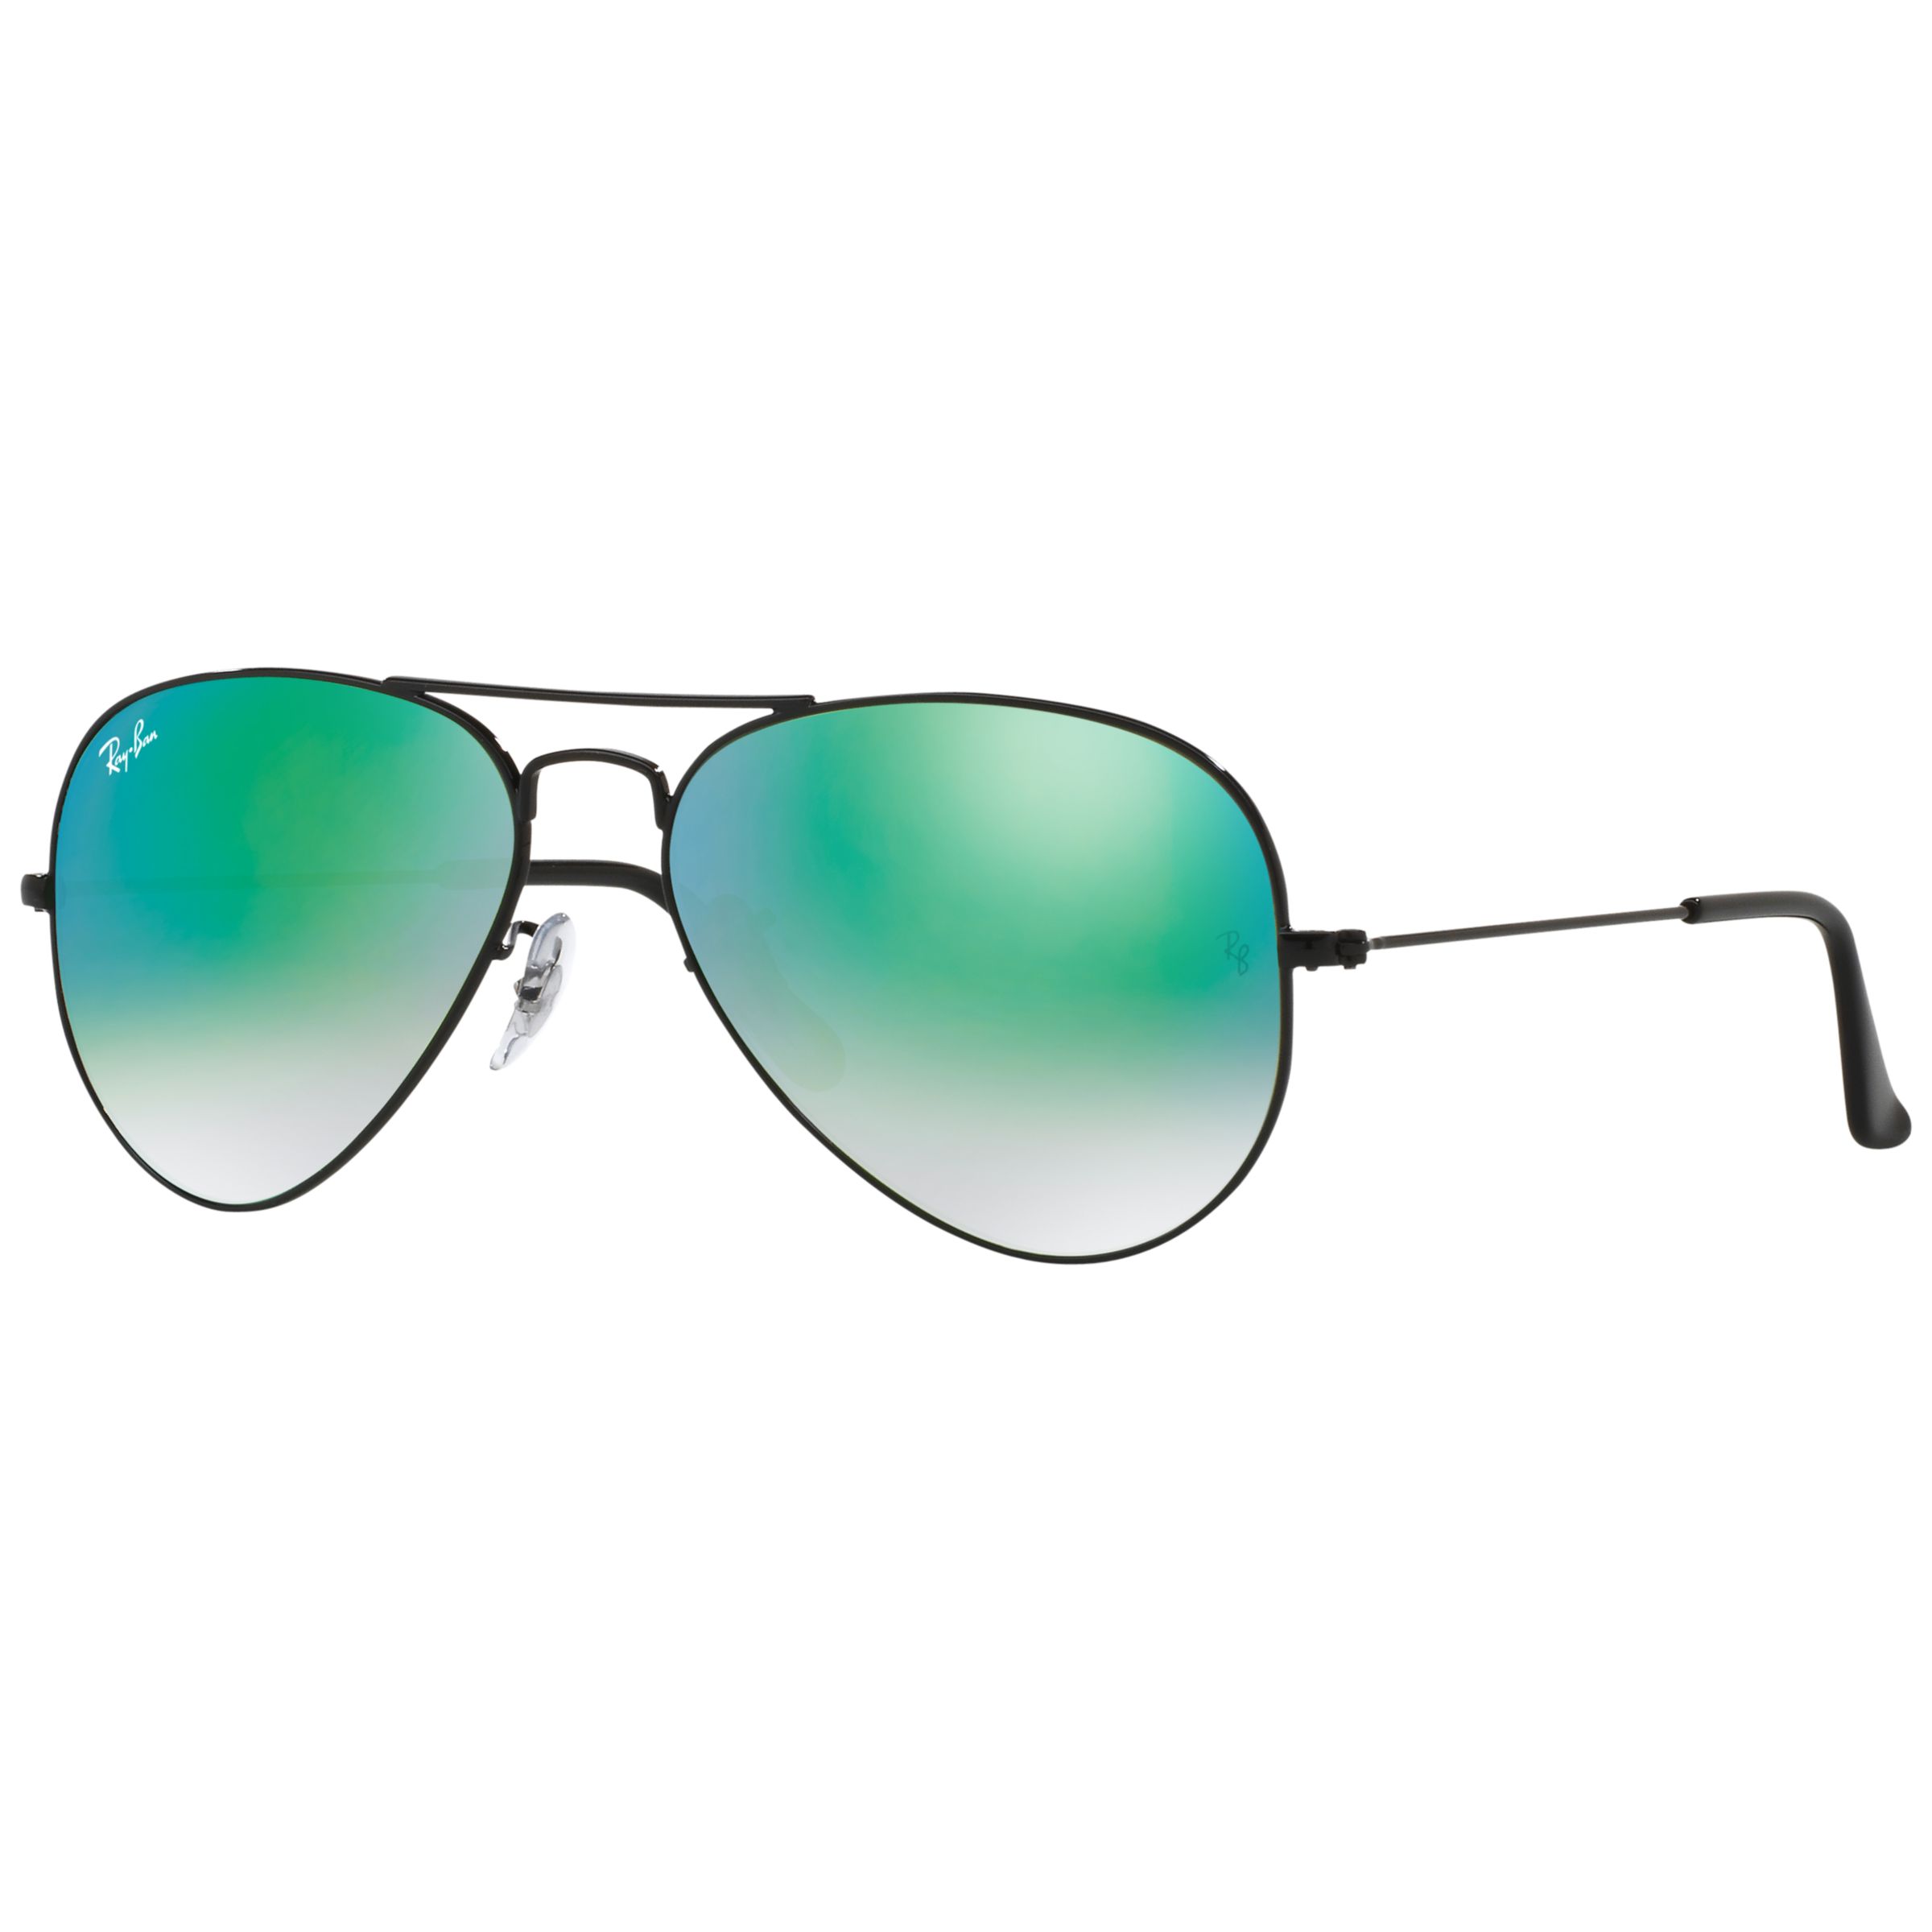 Ray-Ban RB3025 Original Aviator Sunglasses, Black/Mirror Green